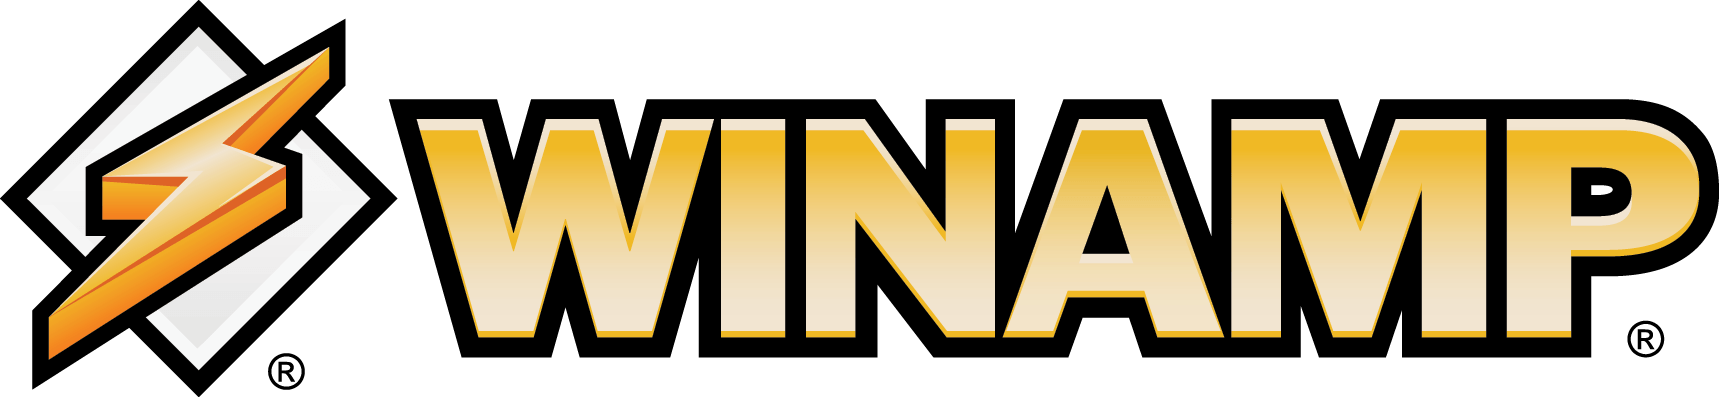 Winamp Logo - Winamp Logo | Vincent's james pierce senior and i am a rapper ...